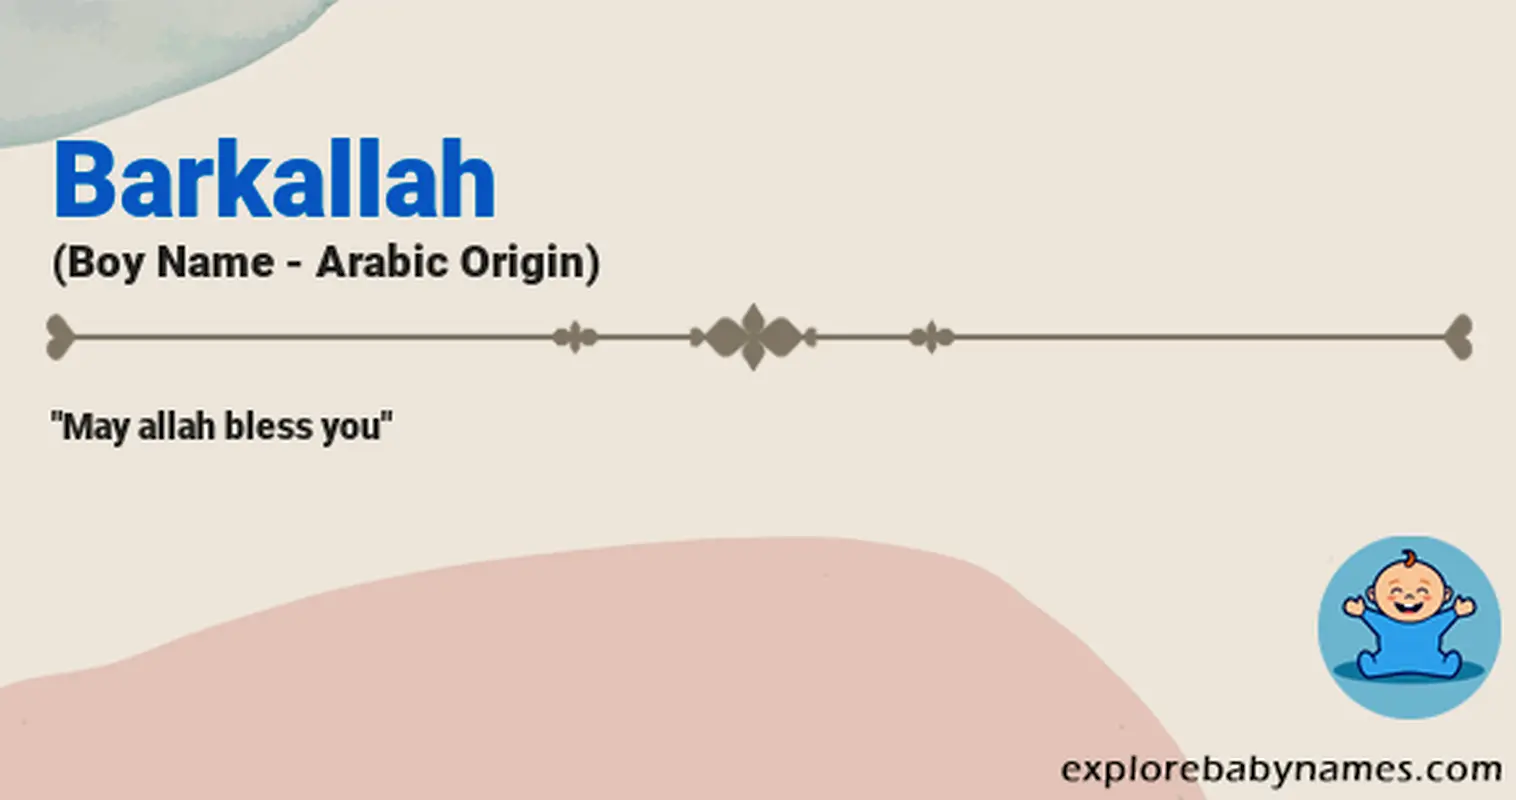 Meaning of Barkallah